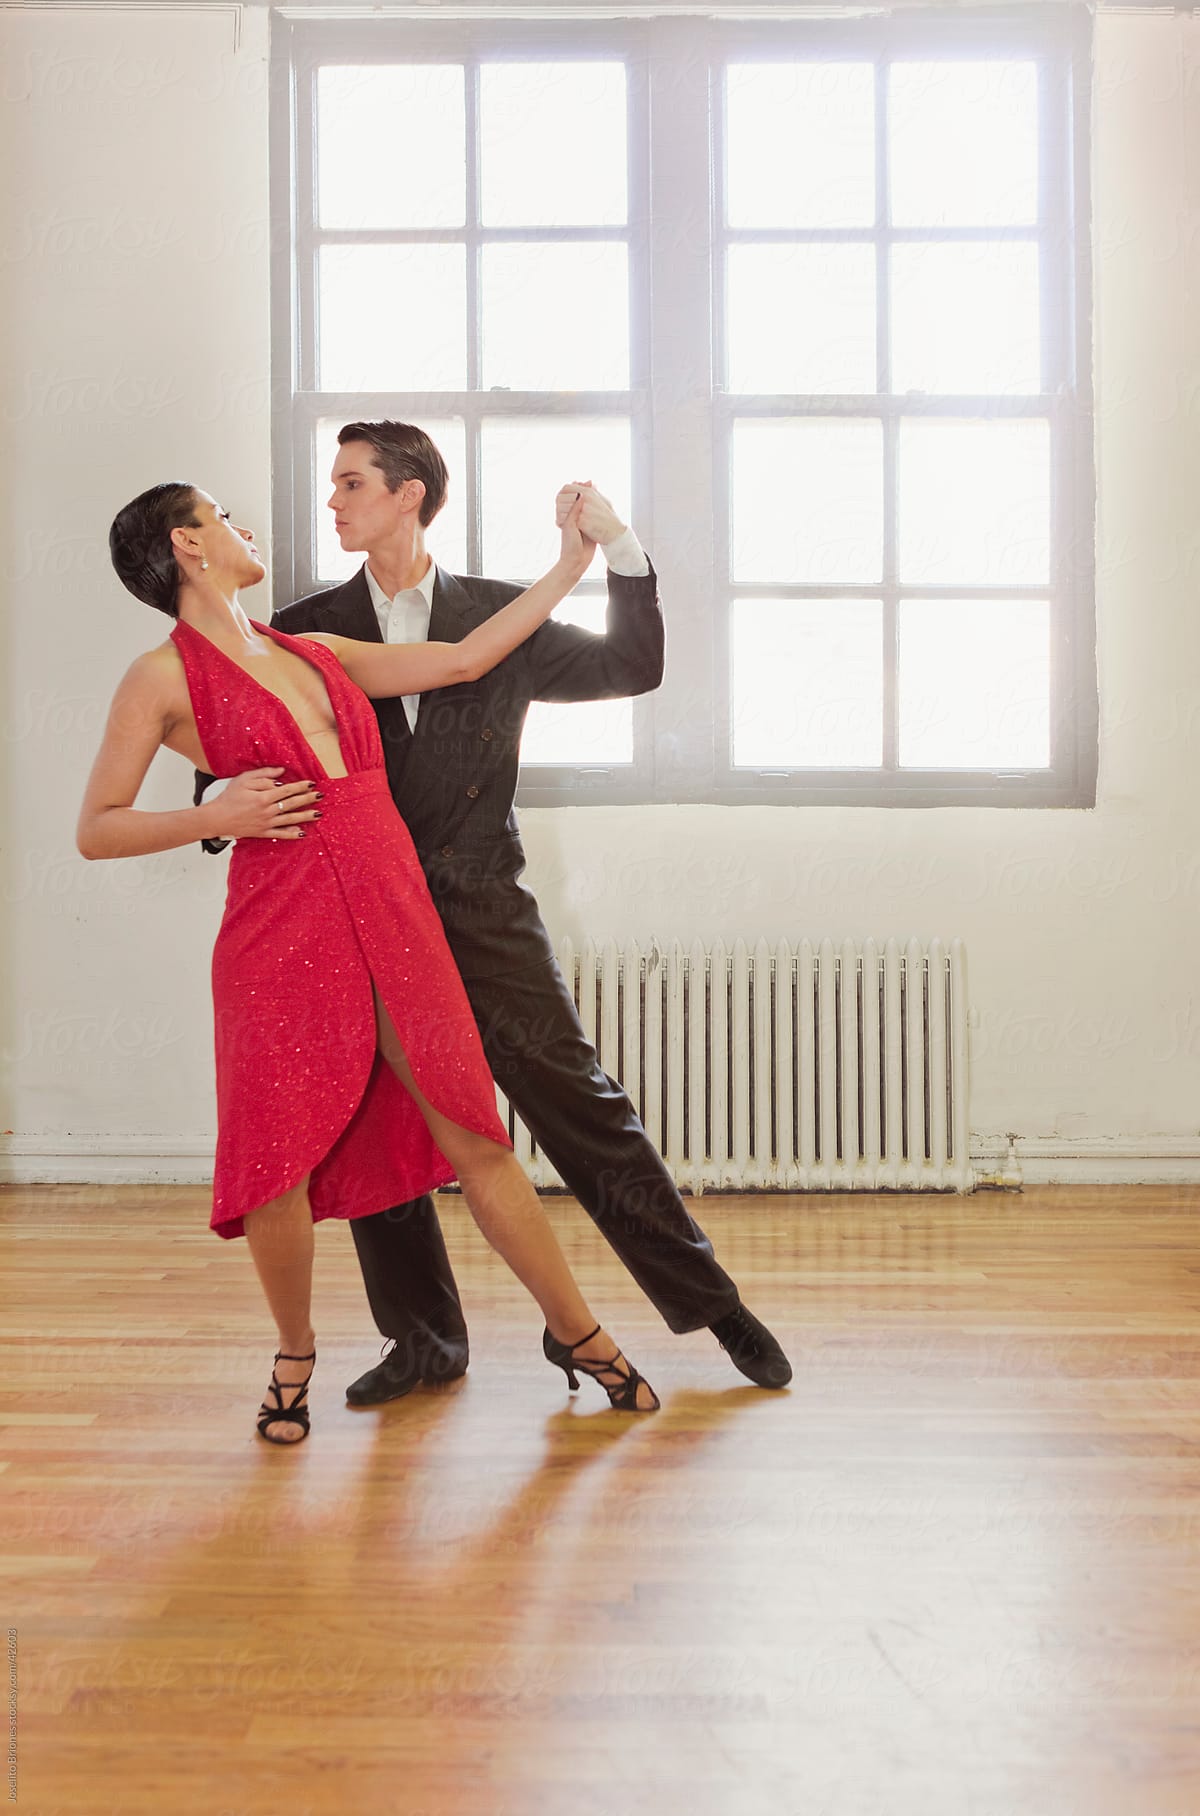 Ballroom Dancing - Couple in Argentinian Tango